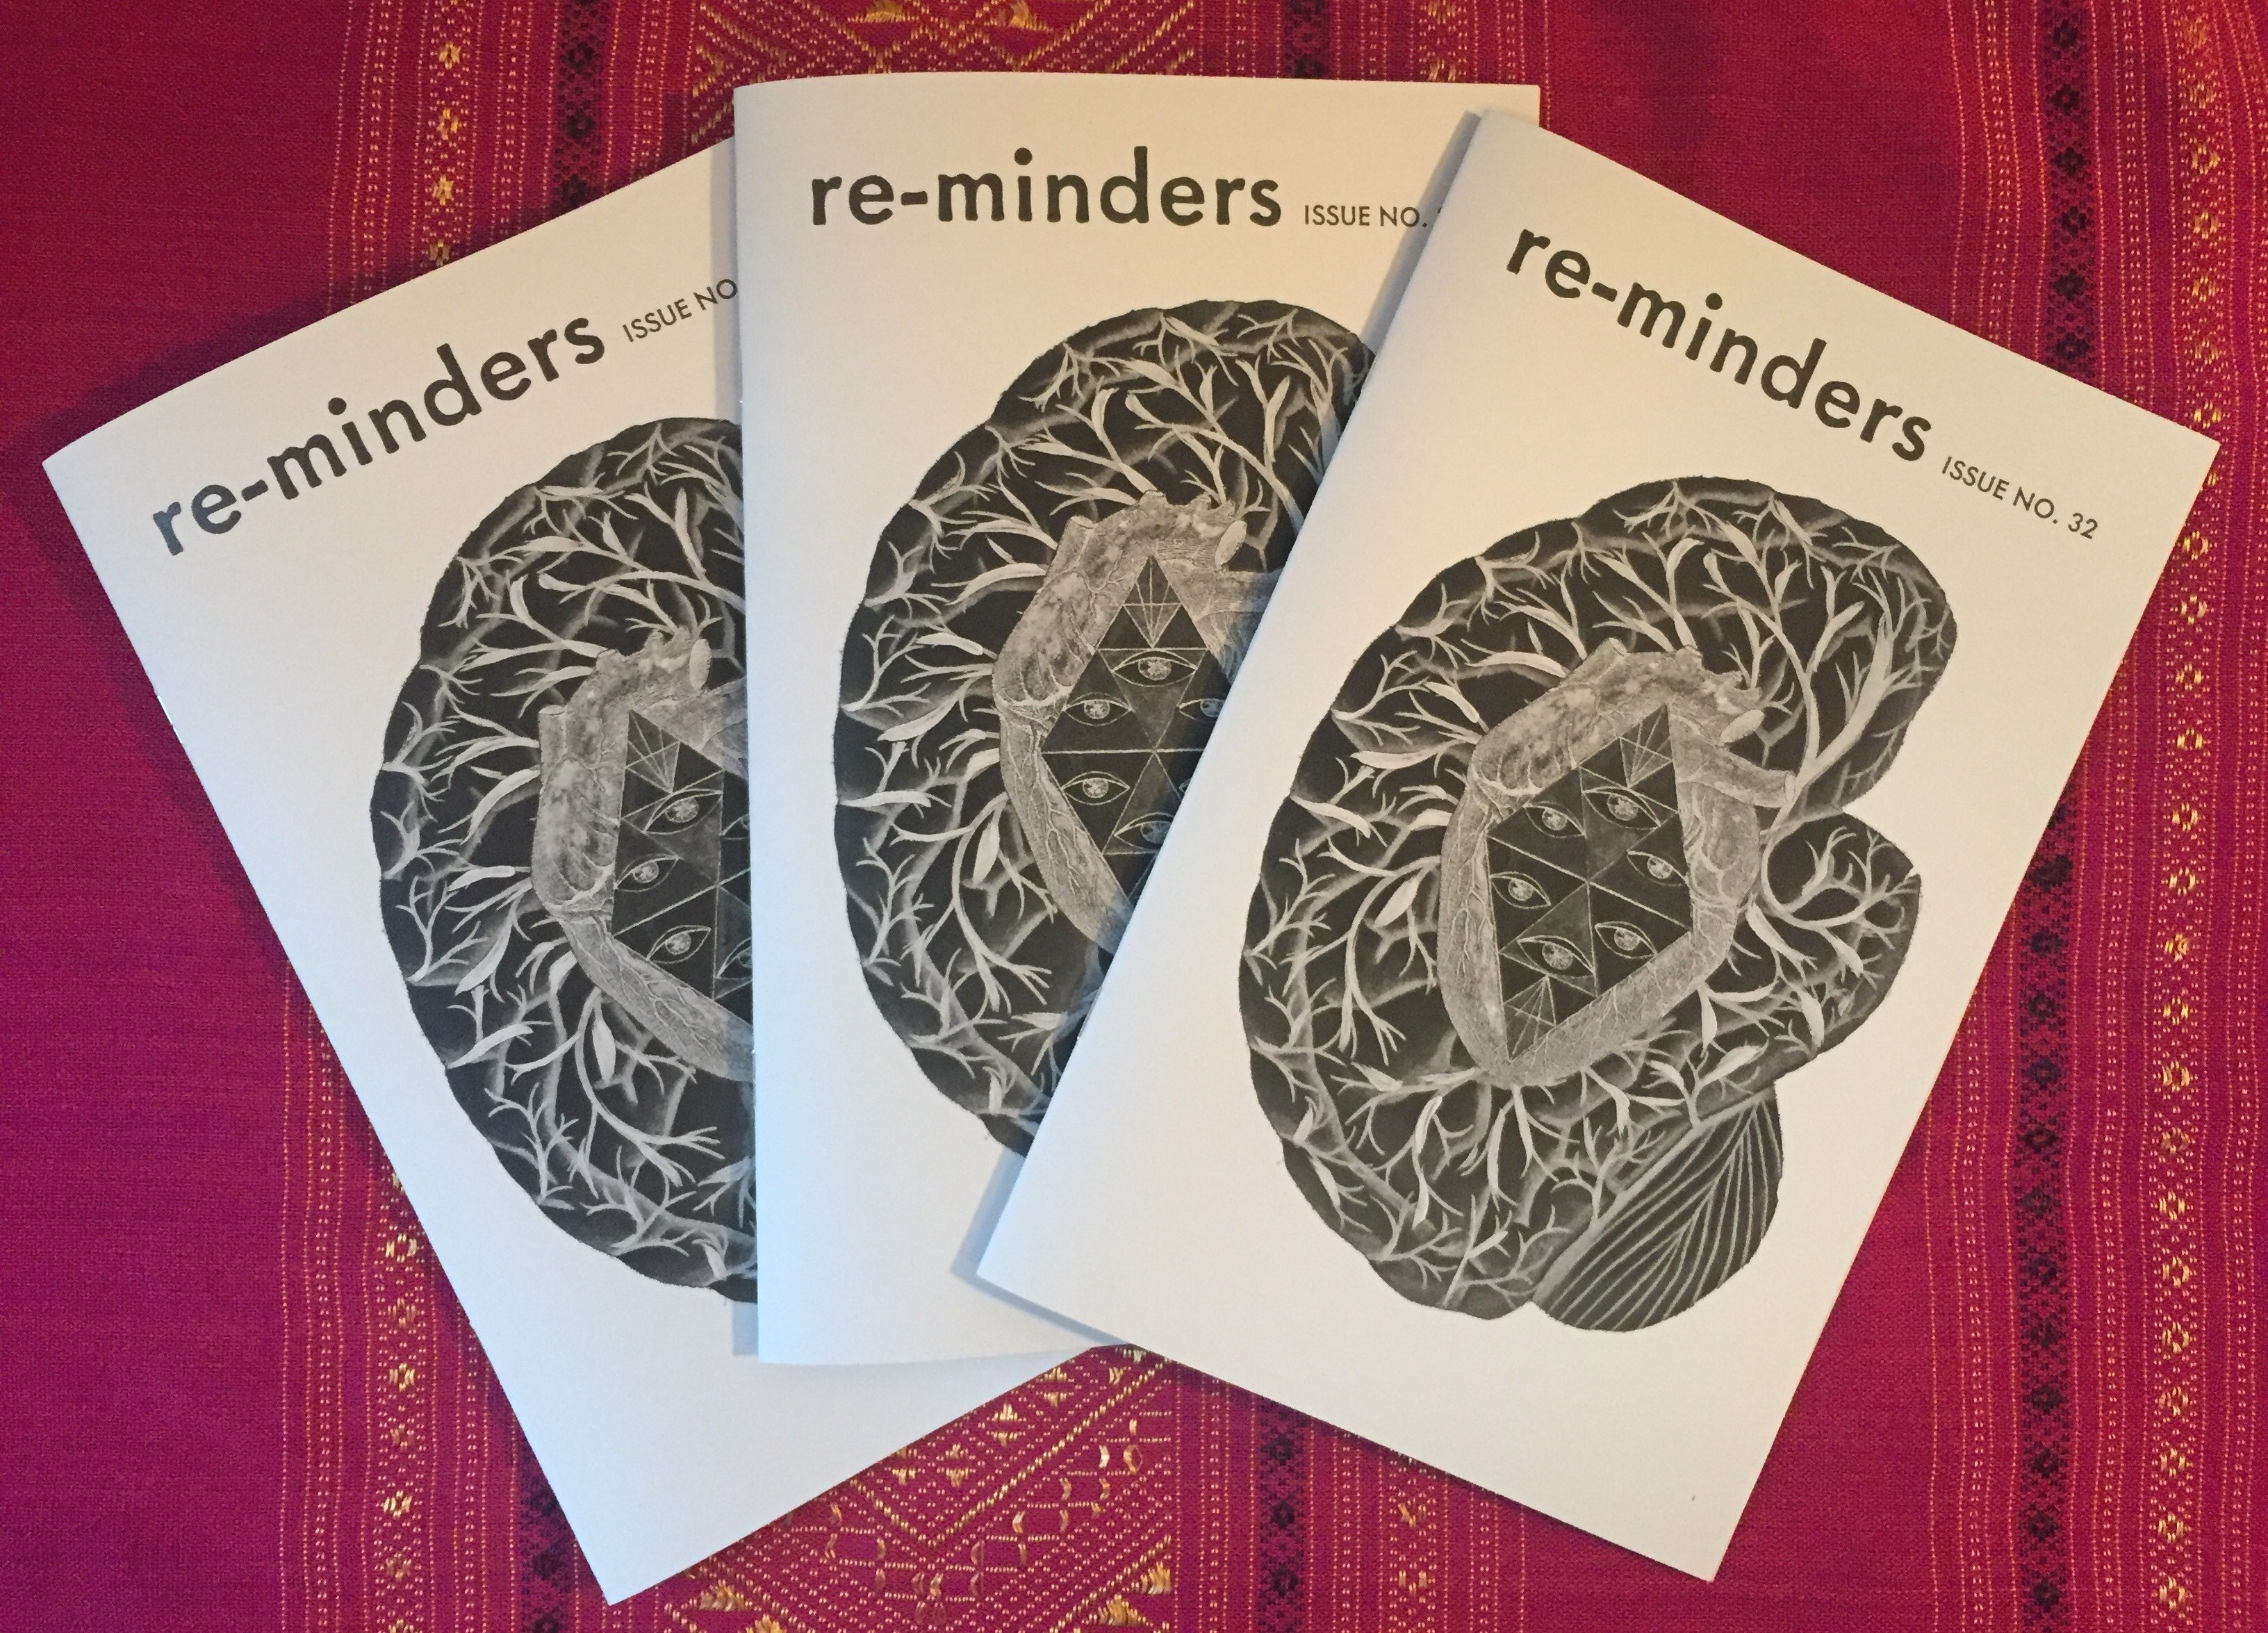 3 zines titled "reminders" on display